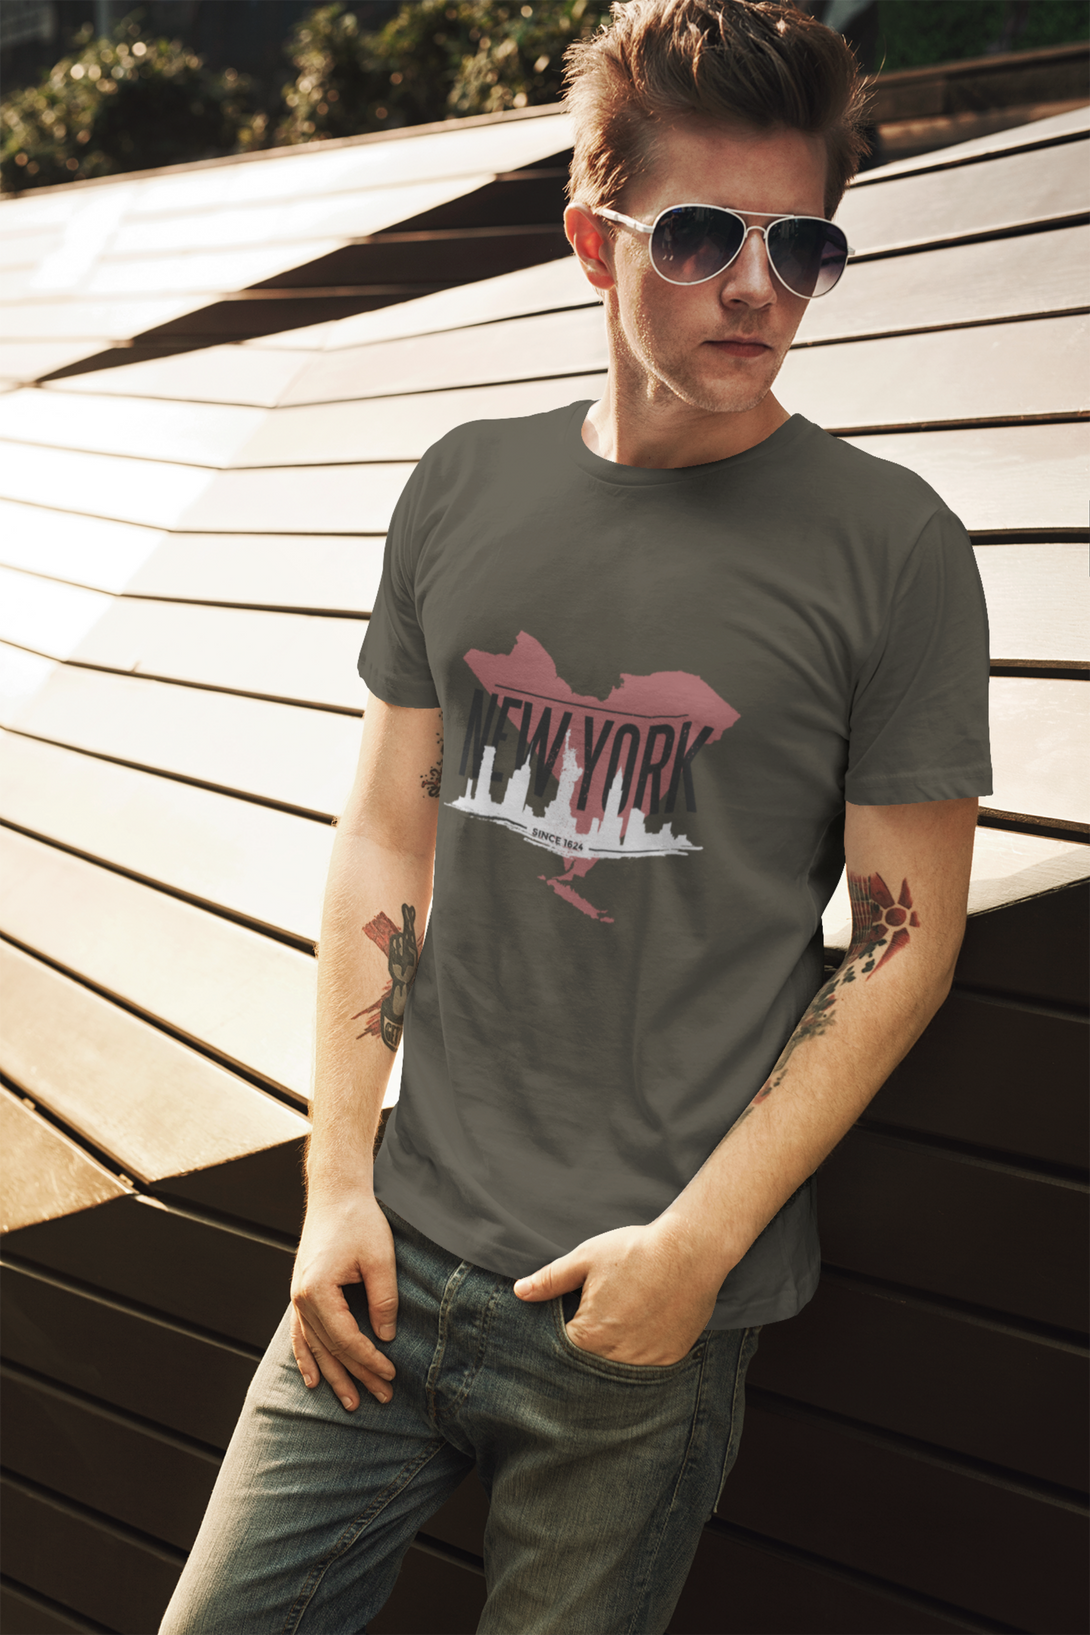 New York Skyline Printed T-Shirt For Men - WowWaves - 5